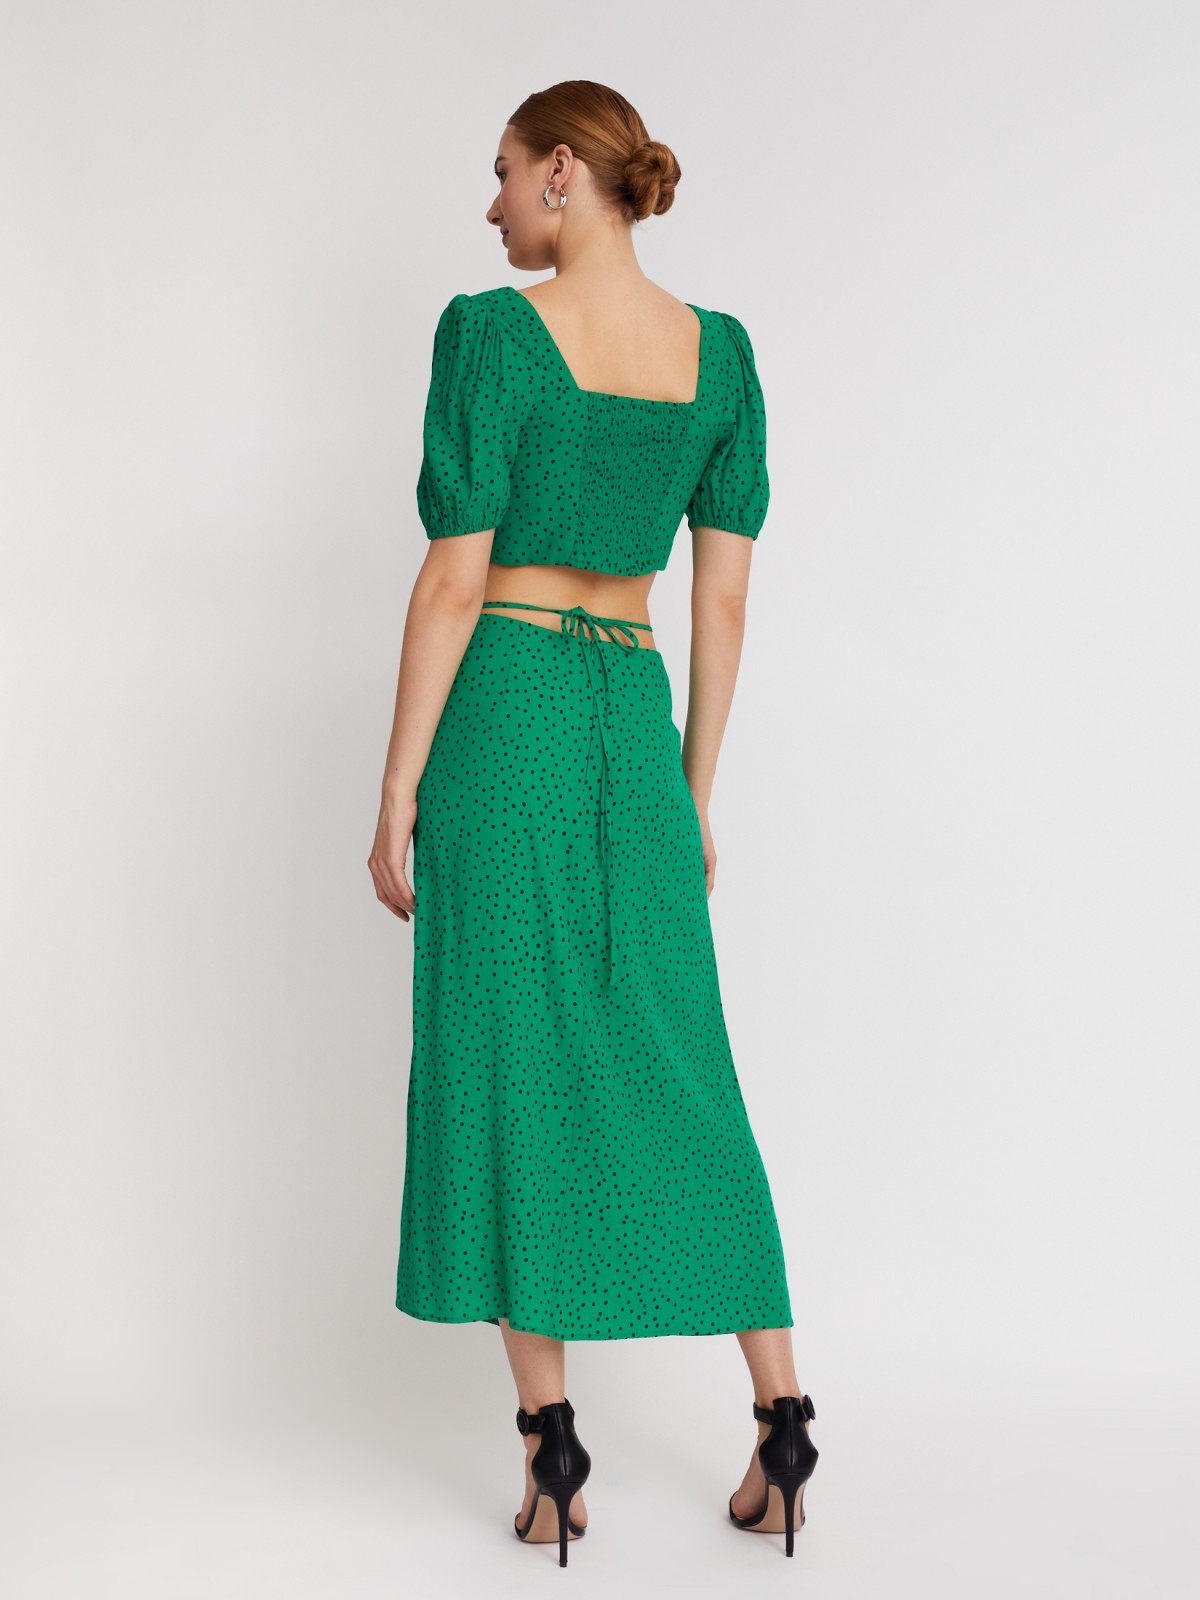 Блузка с короткими рукавами zolla 023241259061, цвет зеленый, размер XXS - фото 6